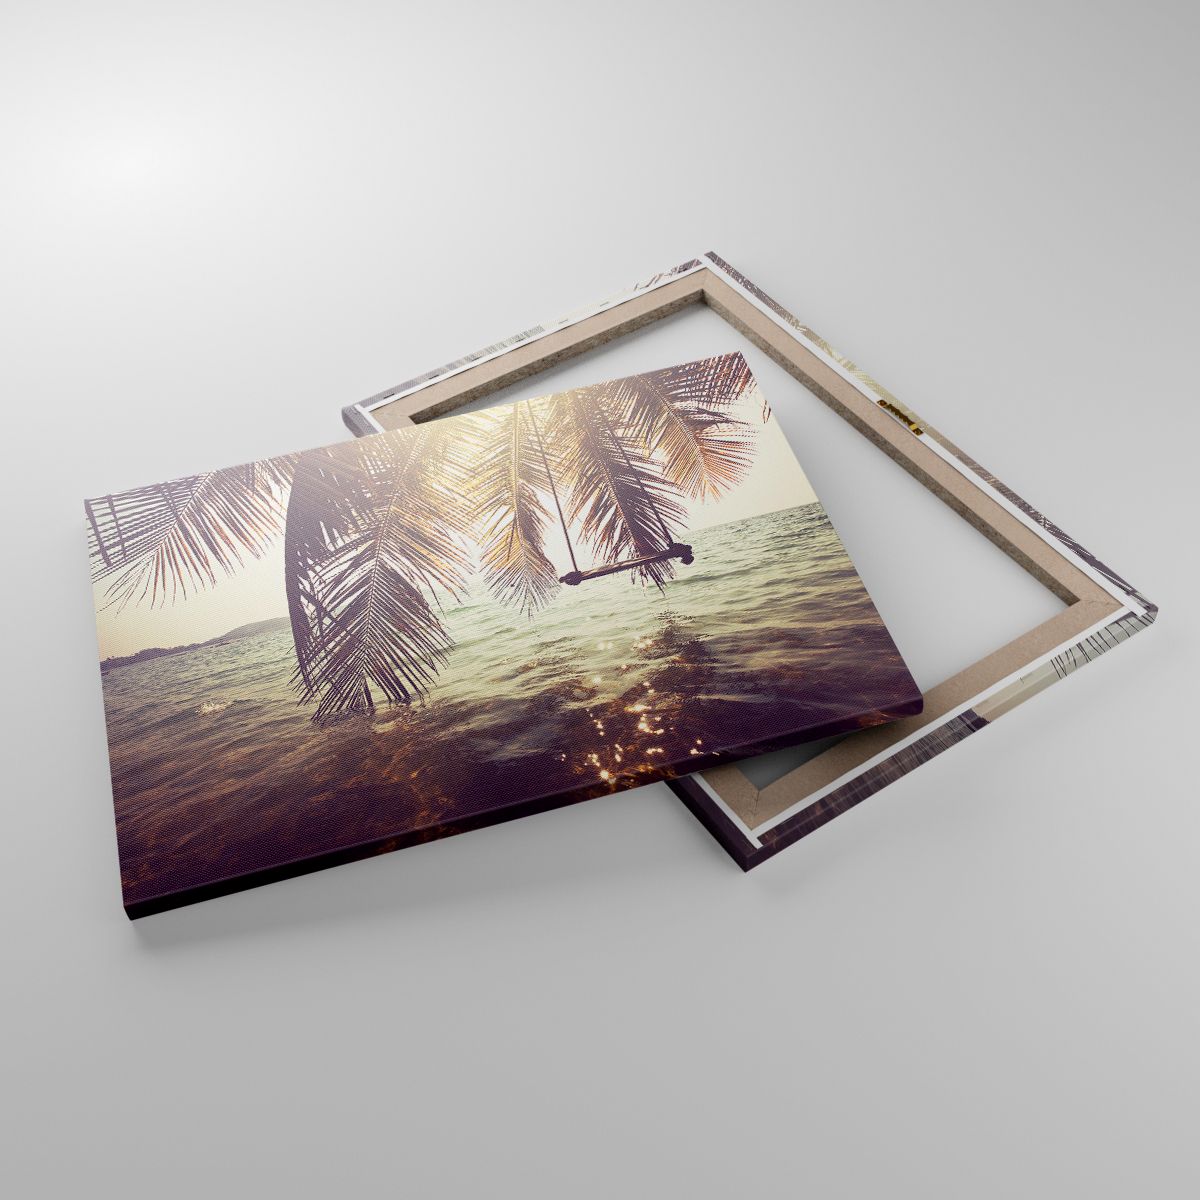 Leinwandbild Landschaft, Leinwandbild Kokusnuss-Palme, Leinwandbild Meer, Leinwandbild Rocker, Leinwandbild Sonnenstrahlen